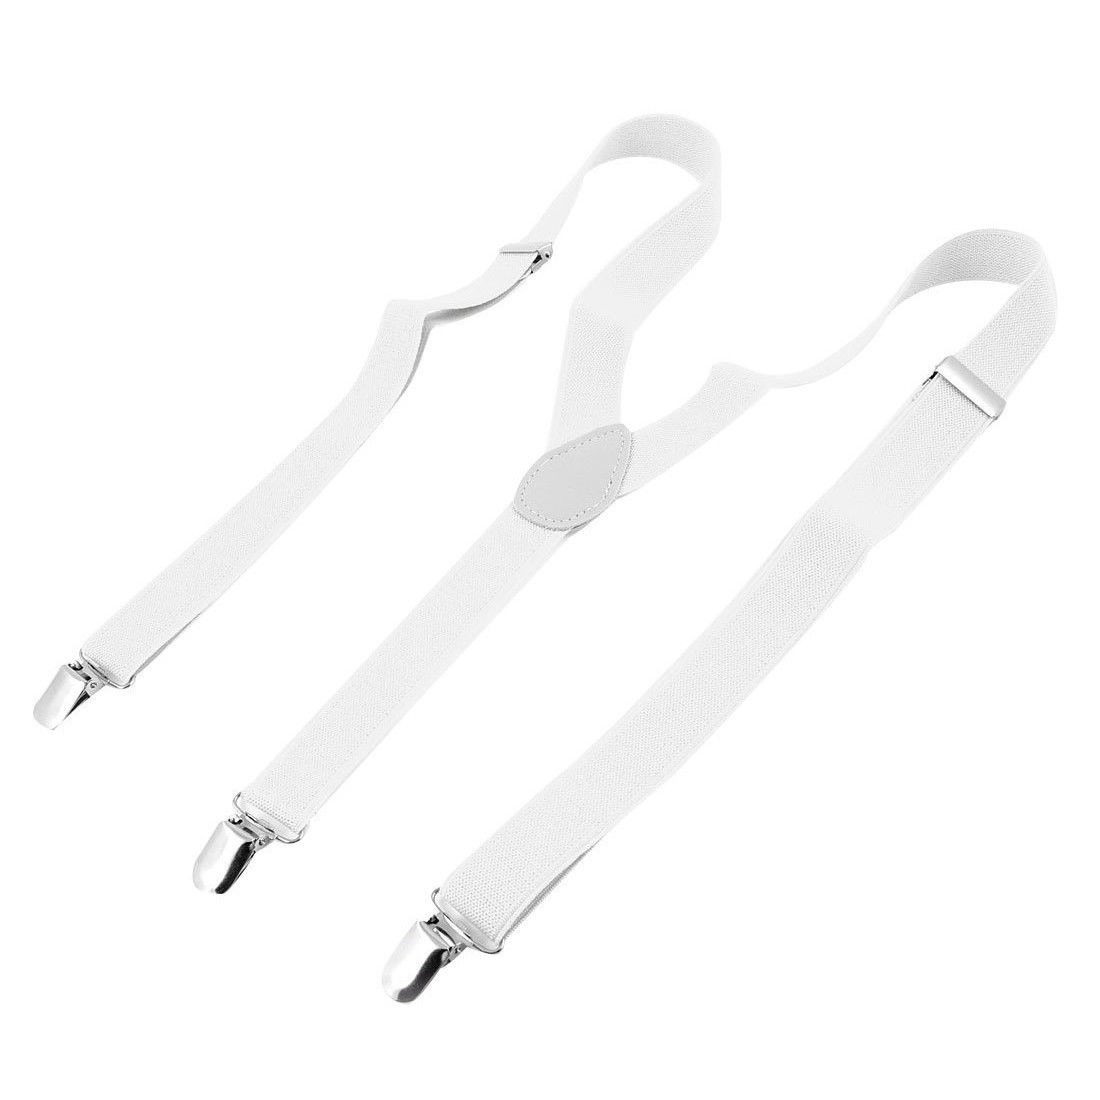 Unisex Clip-on Braces Elastic "White" Y Back Suspender 1 1/2" 